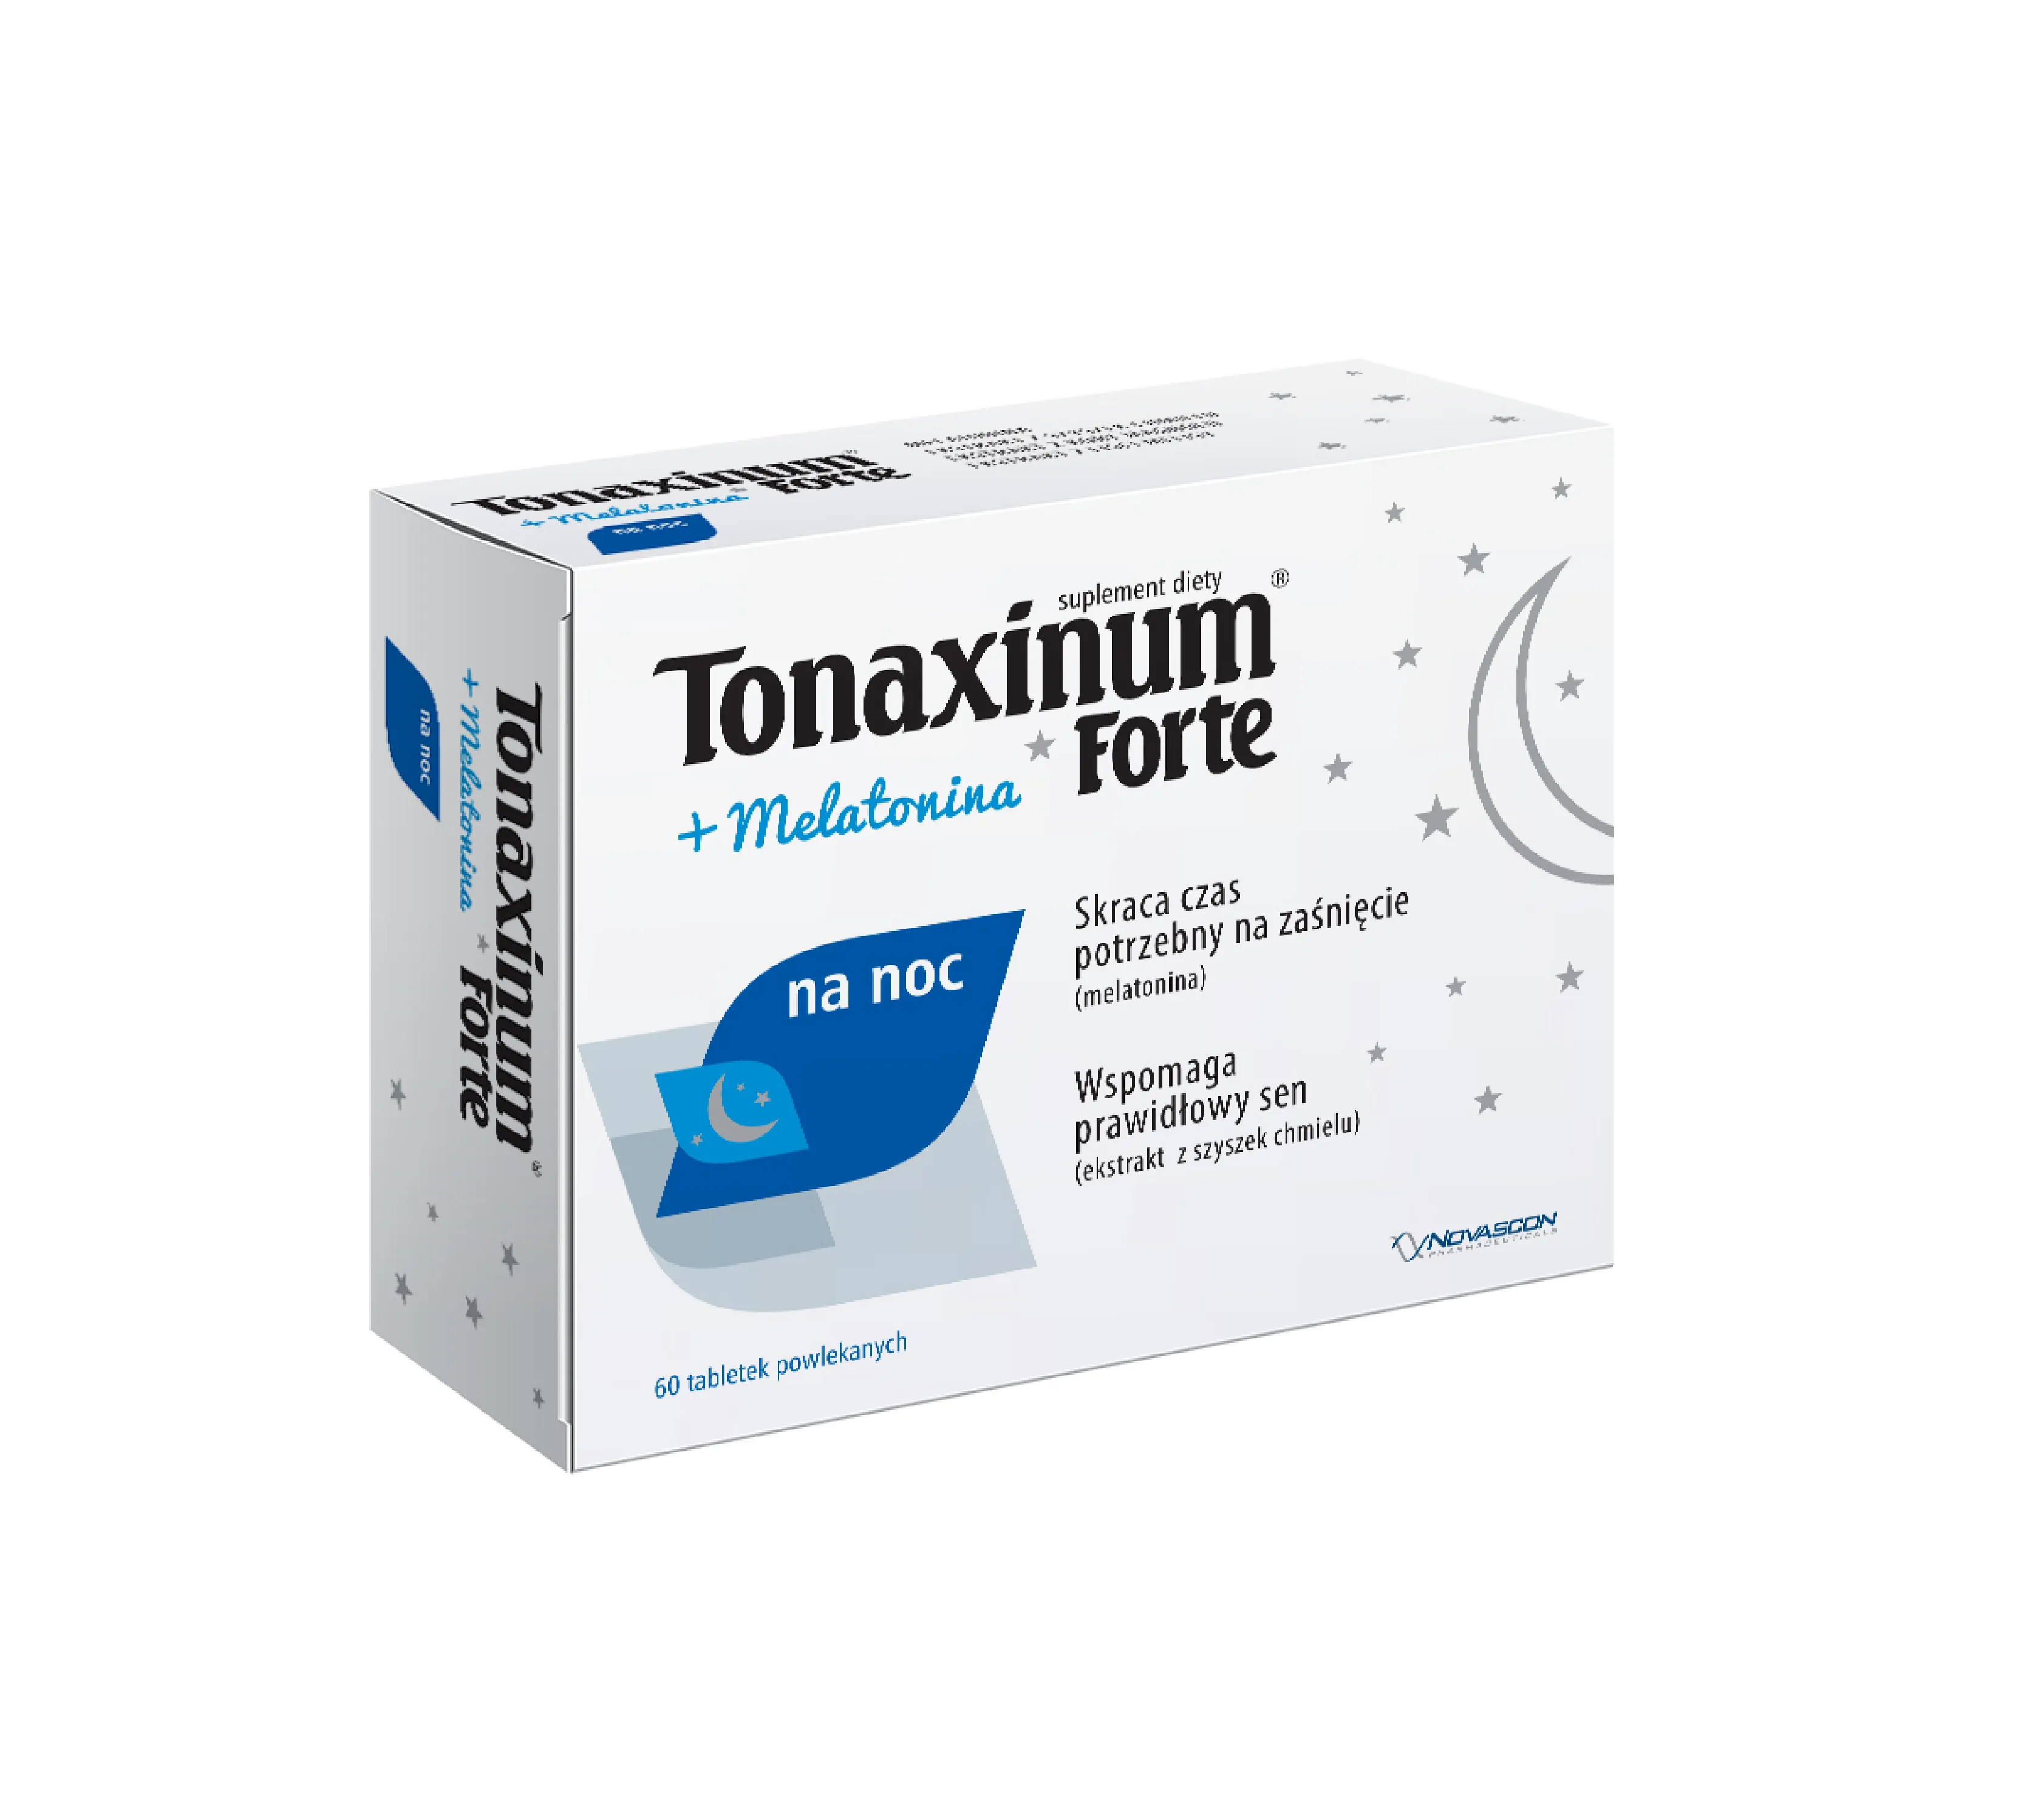 Tonaxinum Forte + Melatonina, suplement diety,  60 tabletek powlekanych